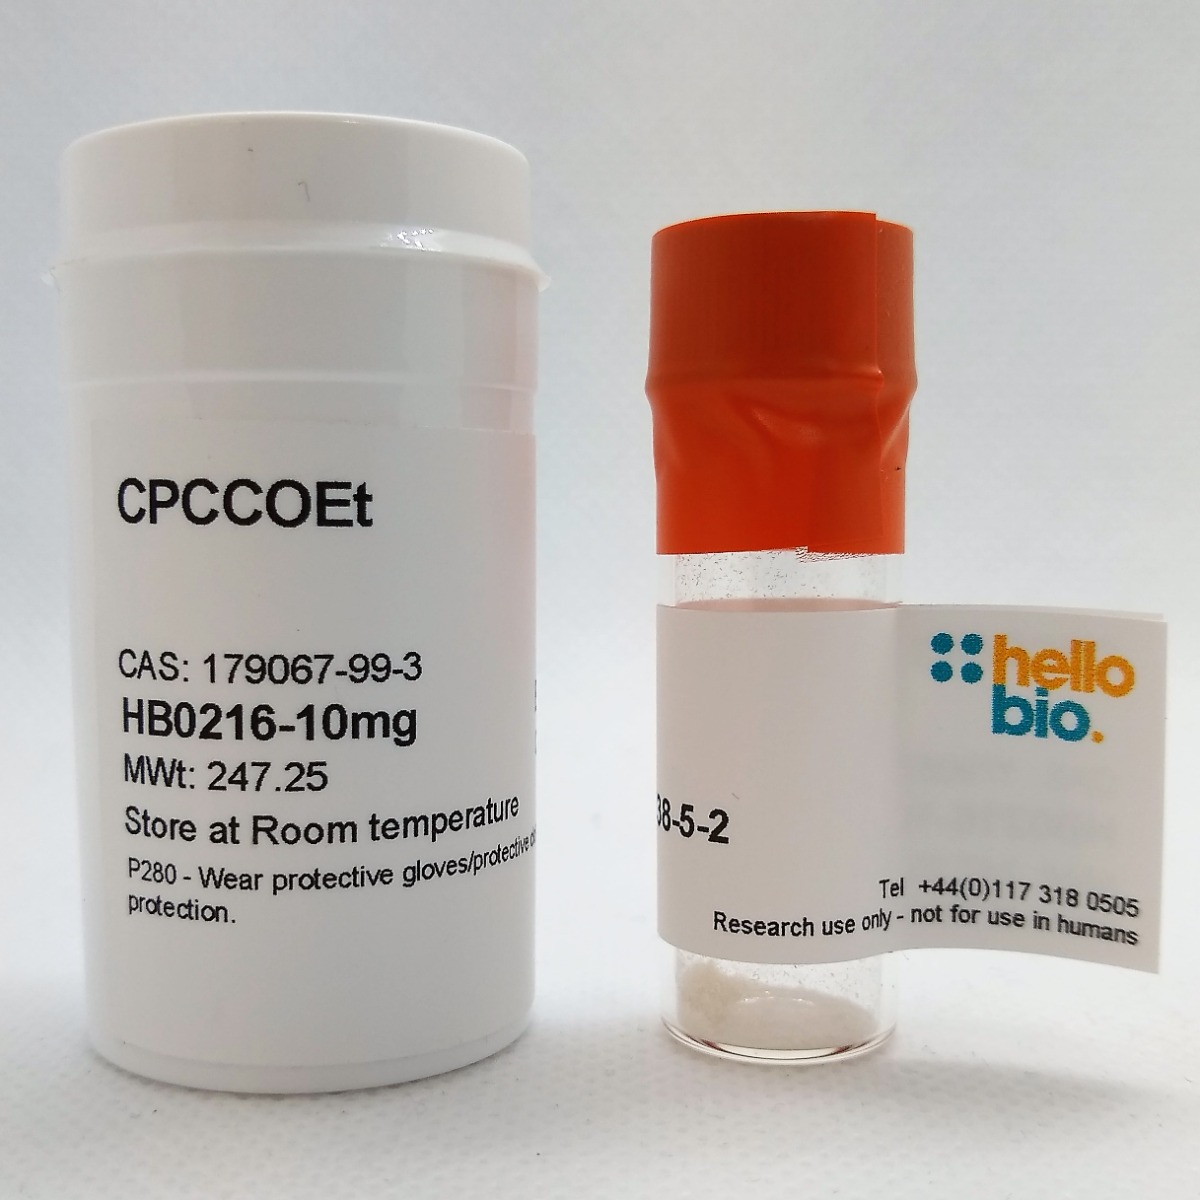 CPCCOEt product vial image | Hello Bio